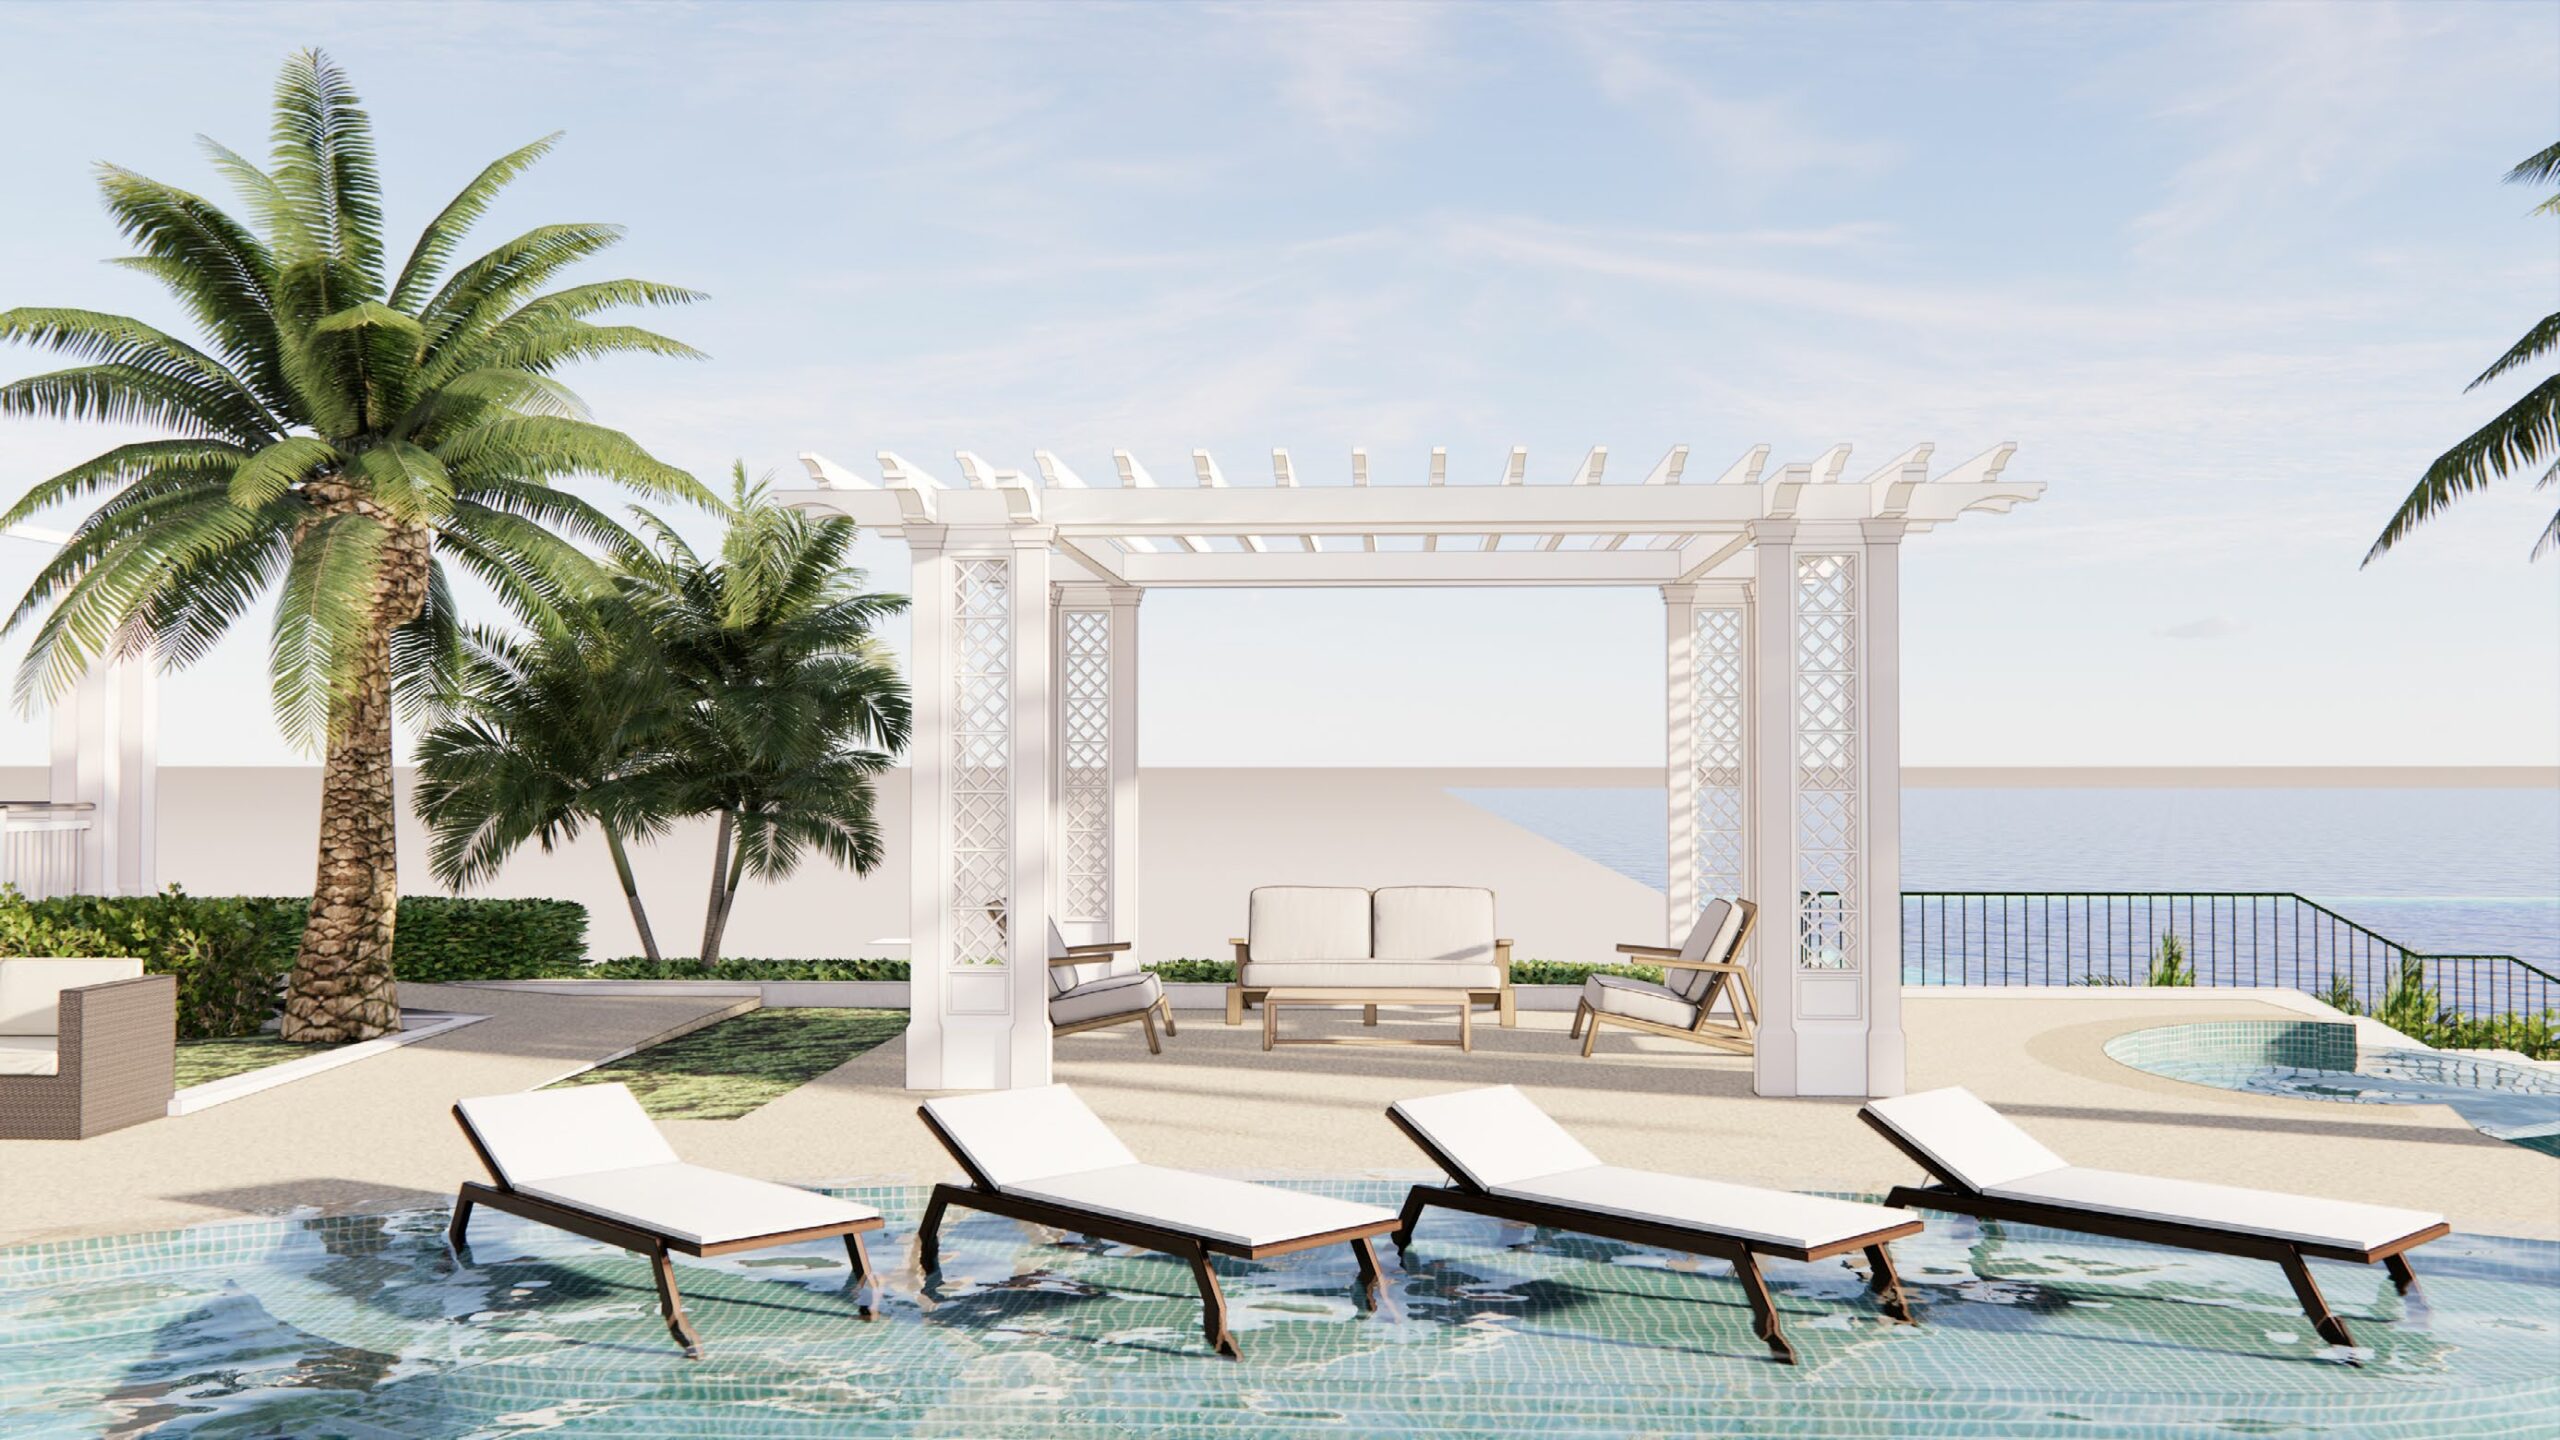 Naples Beach Club pool, sunshelf lounge chairs and cabanas